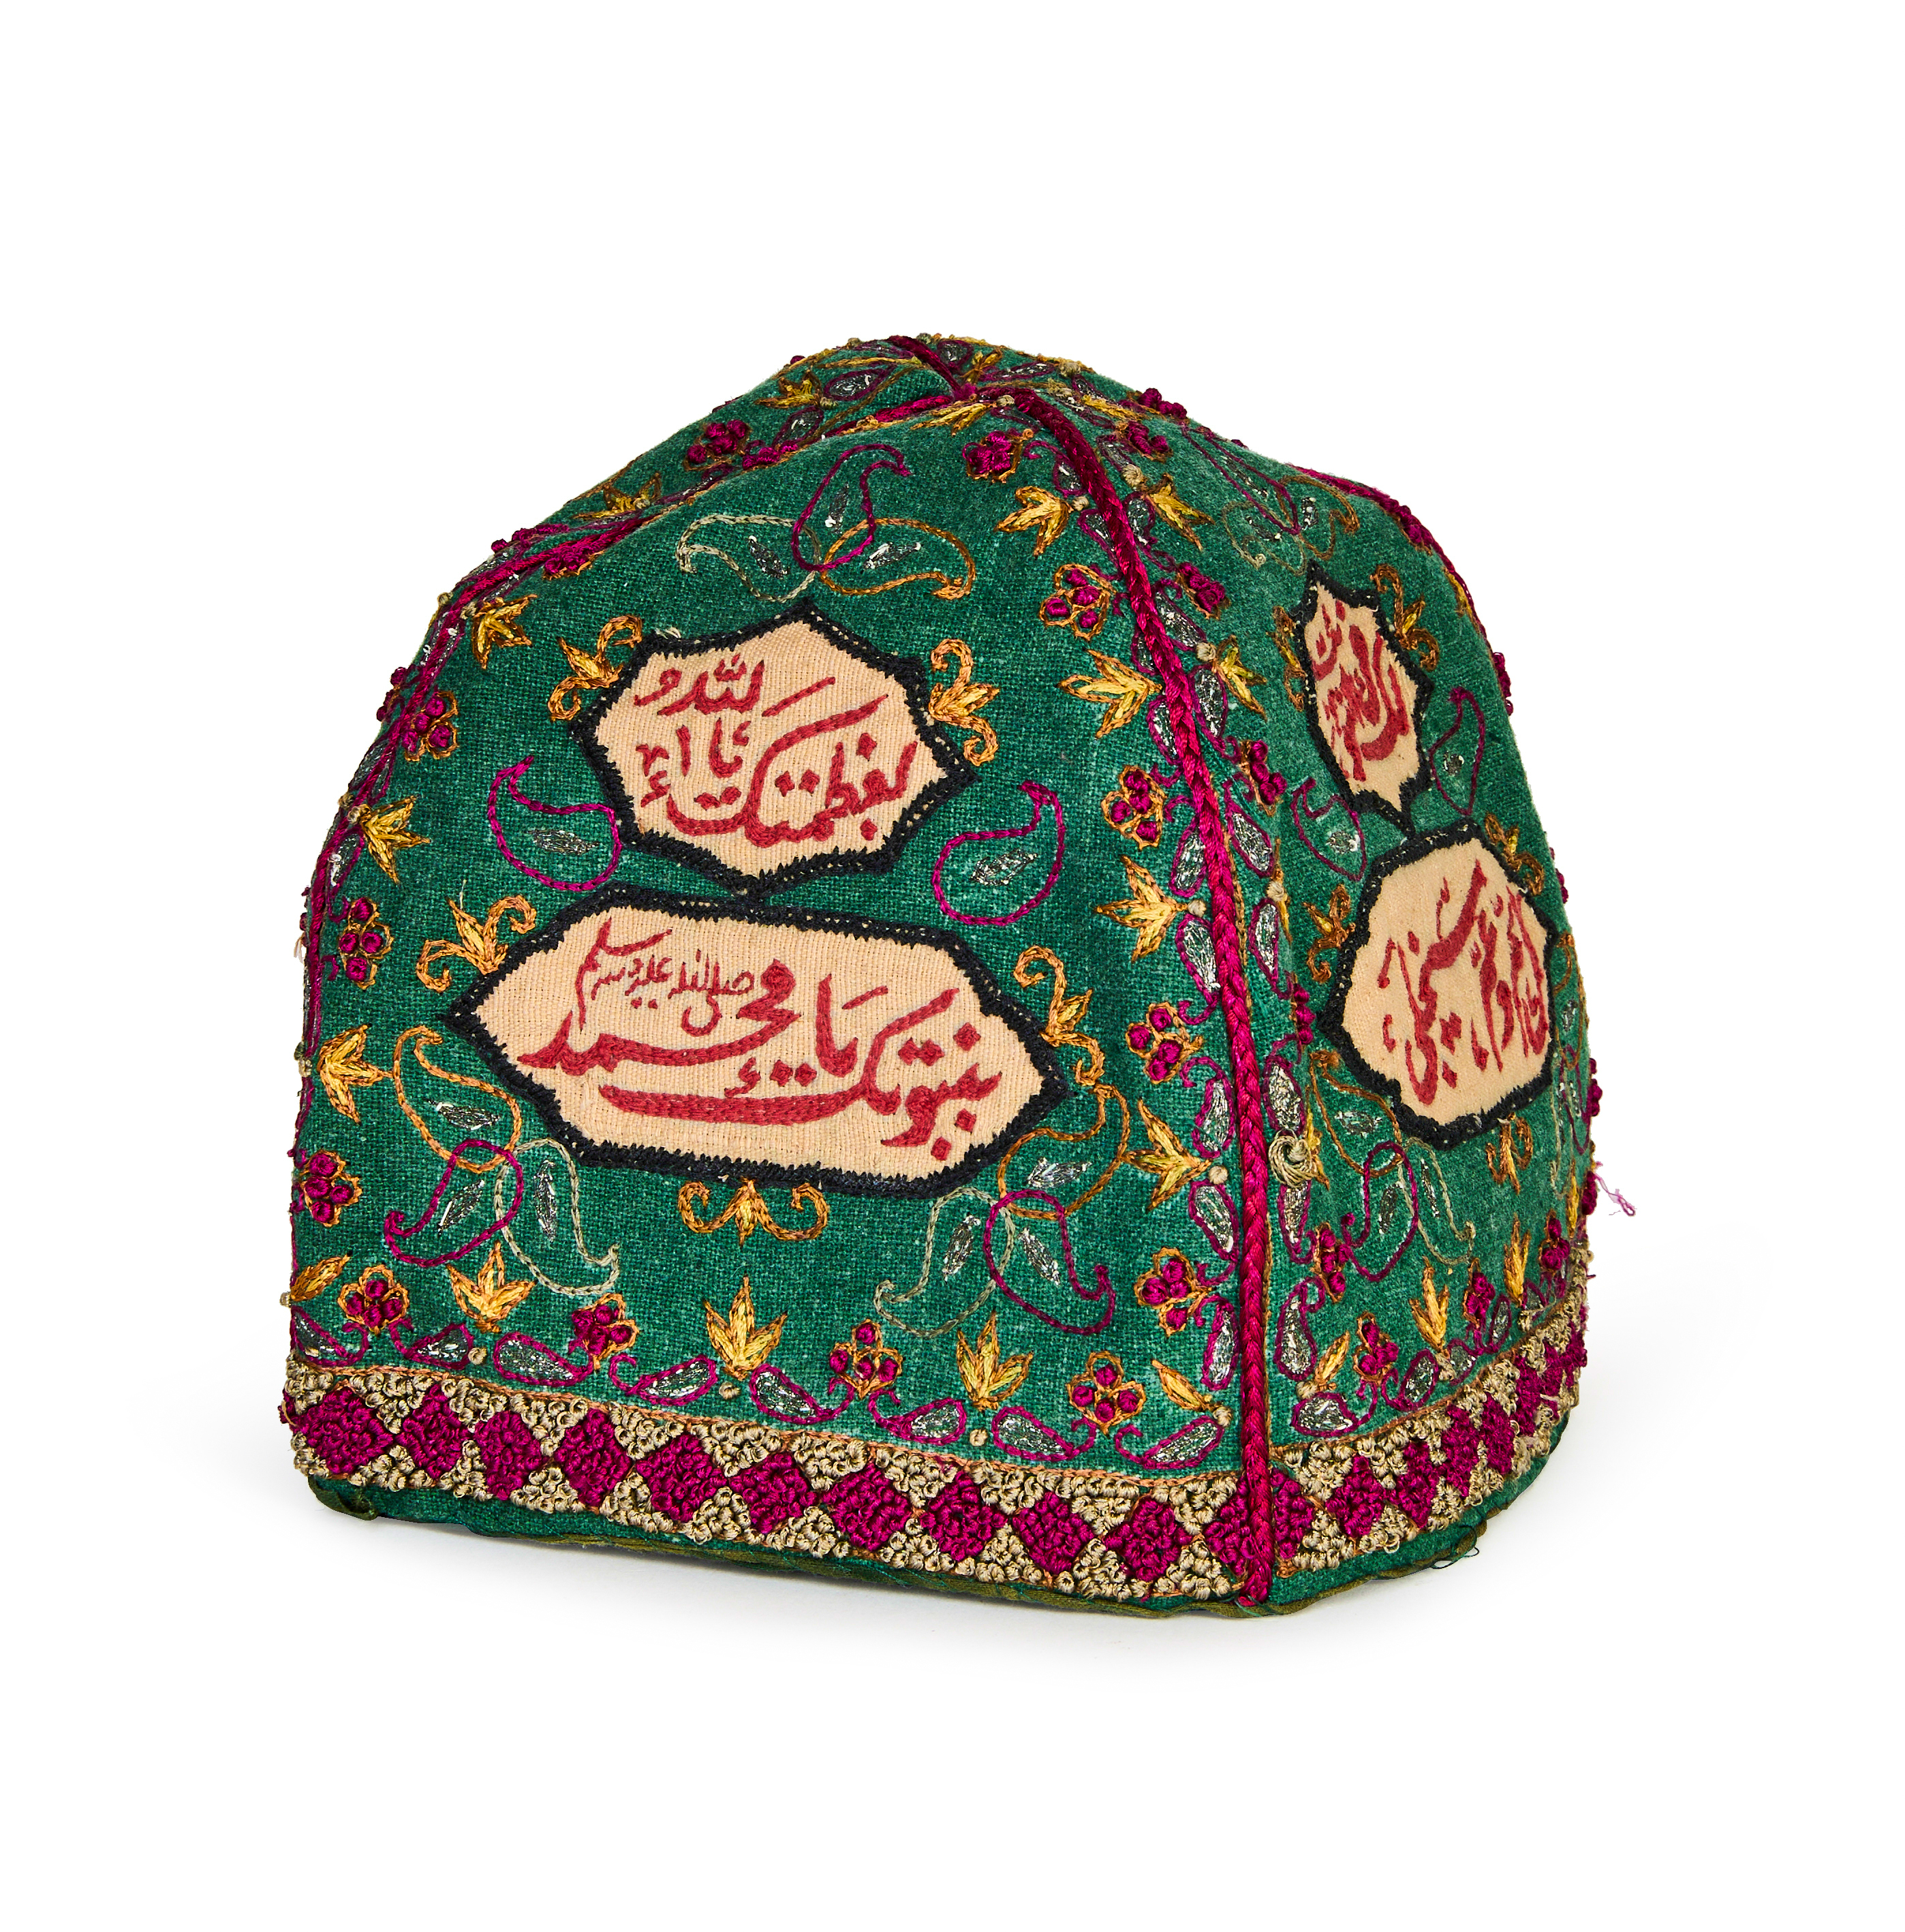 AN INSCRIBED FELT DERVISH HAT, 19TH CENTURY - Image 2 of 3